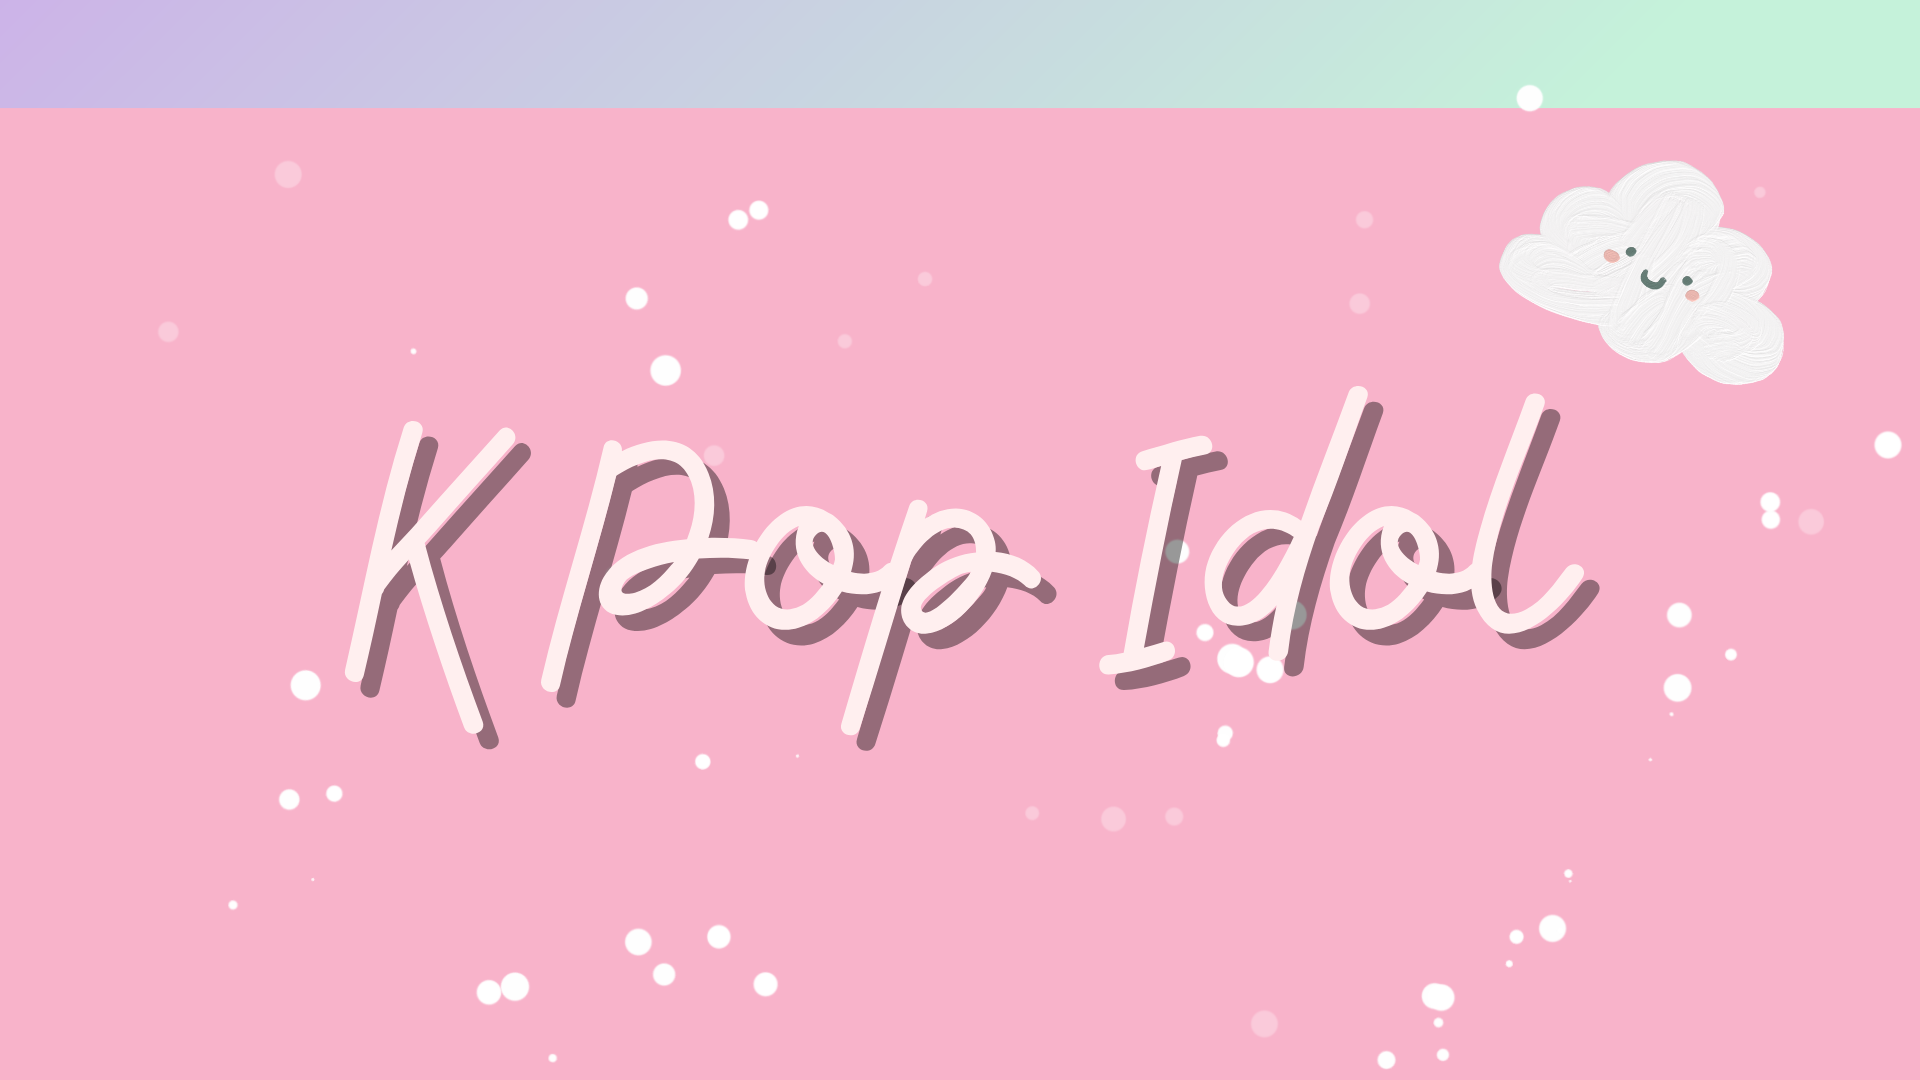 KPop Idol - UK KPOP Shop I Worldwide Shipping Available